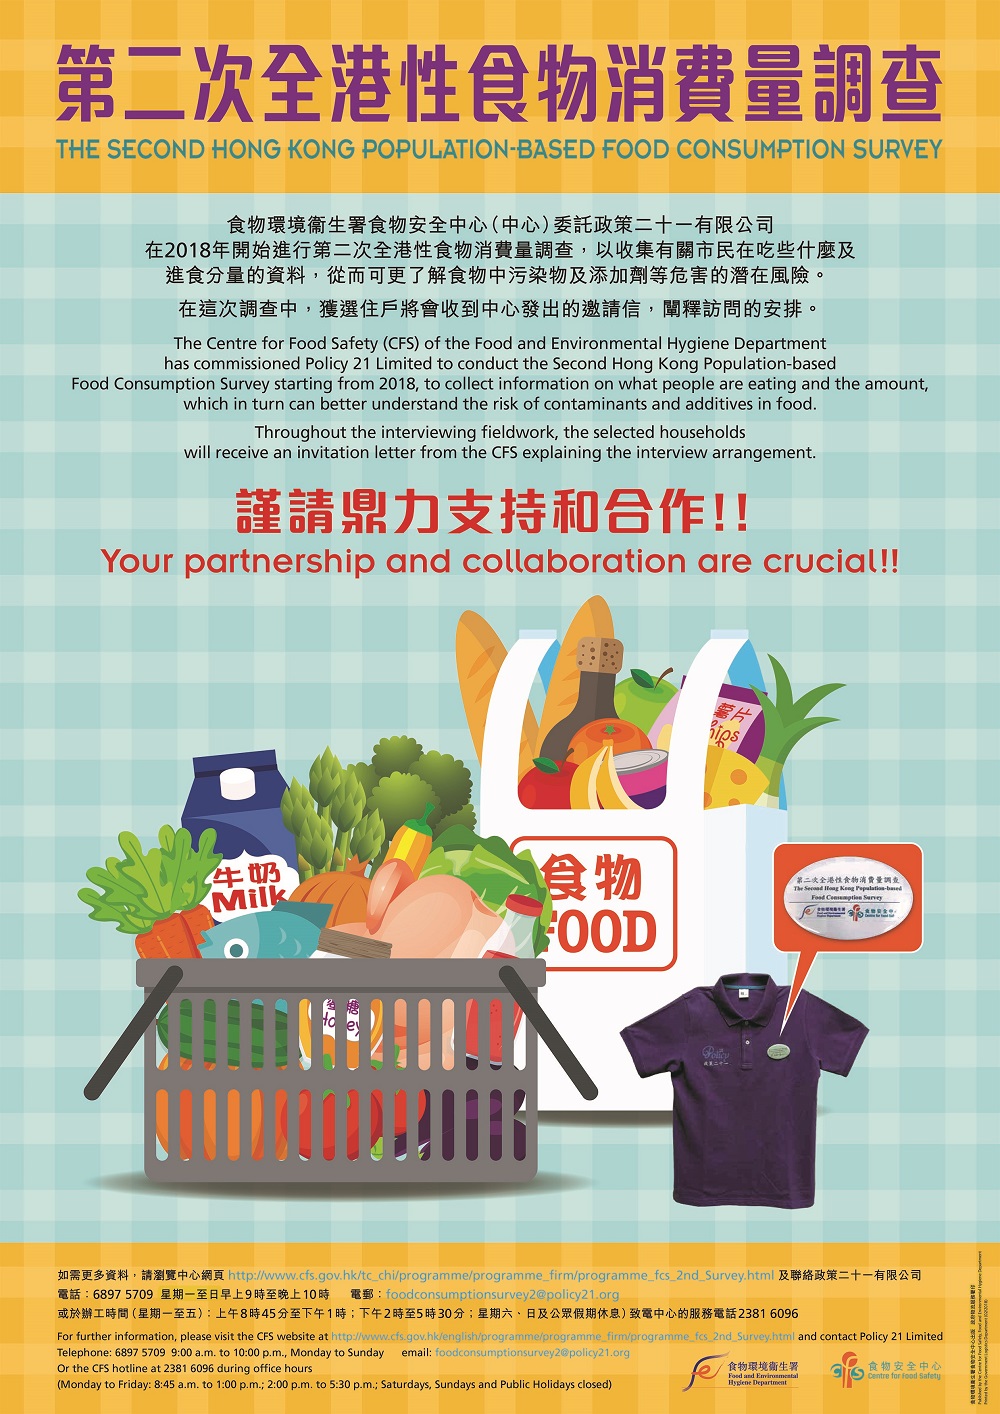 Second Hong Kong Population-based Food Consumption Survey